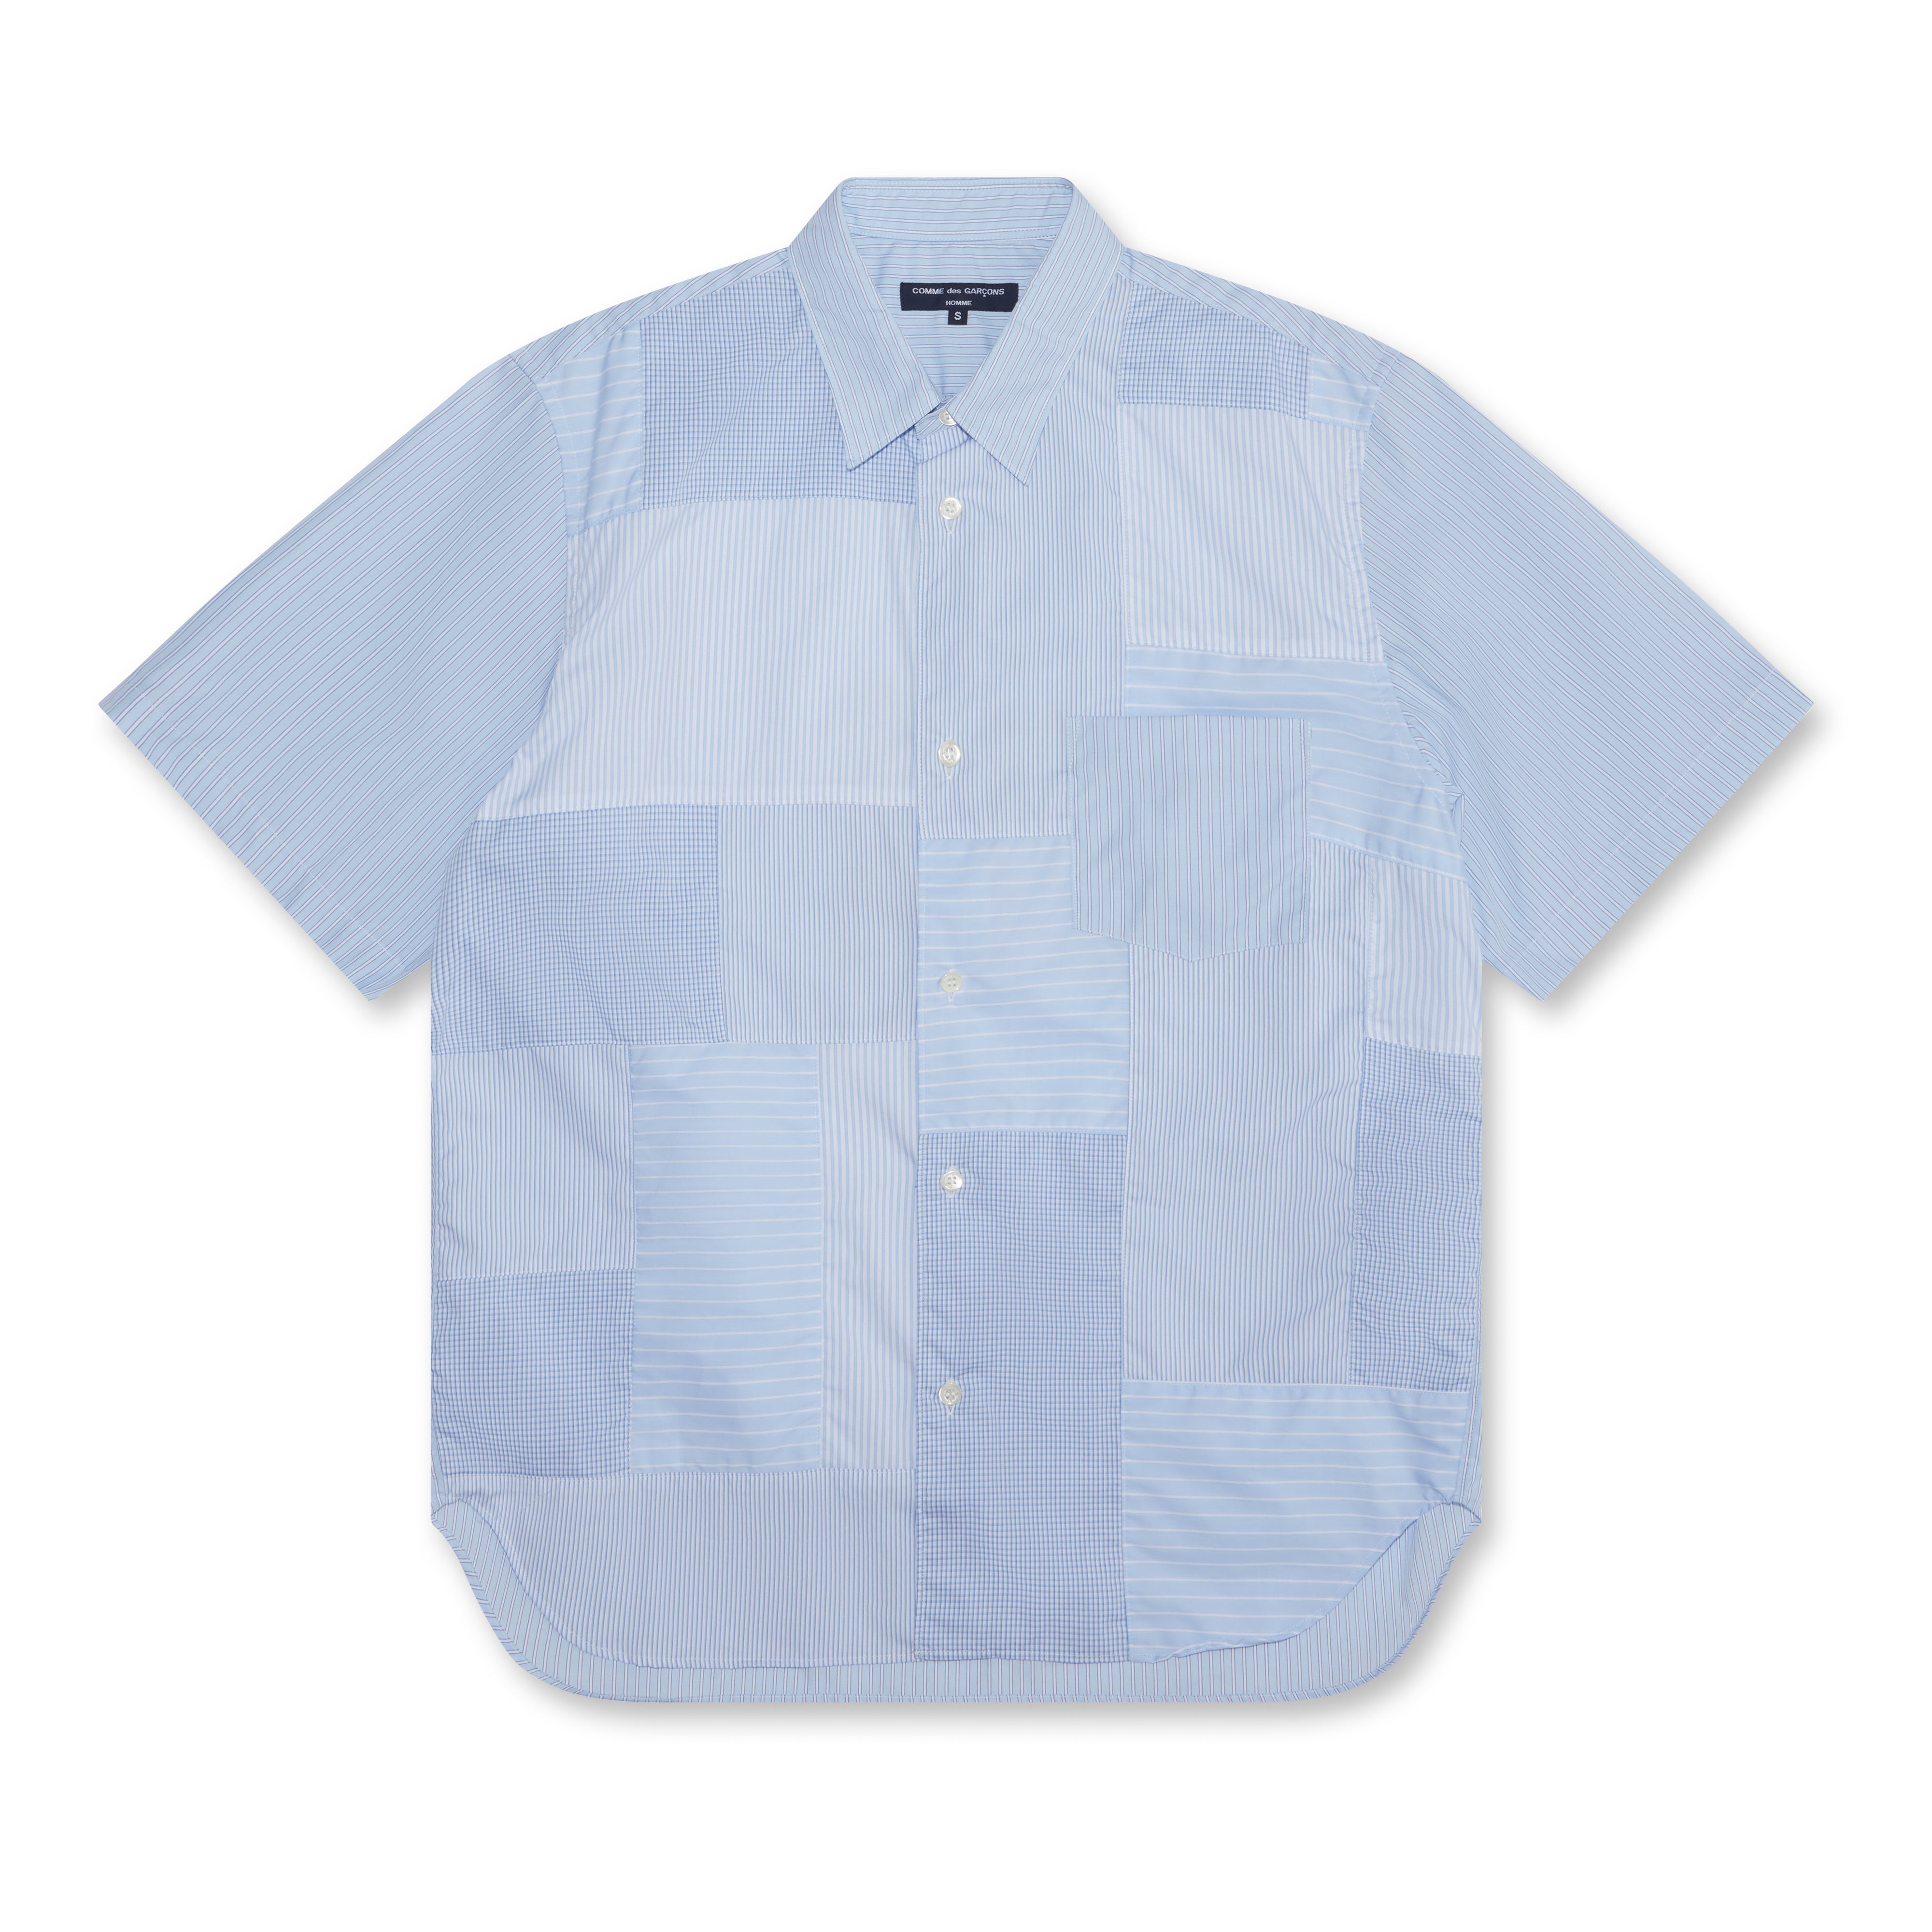 CDG Homme - Cotton Stripe Check Mix Short Sleeve Shirt - (Blue)